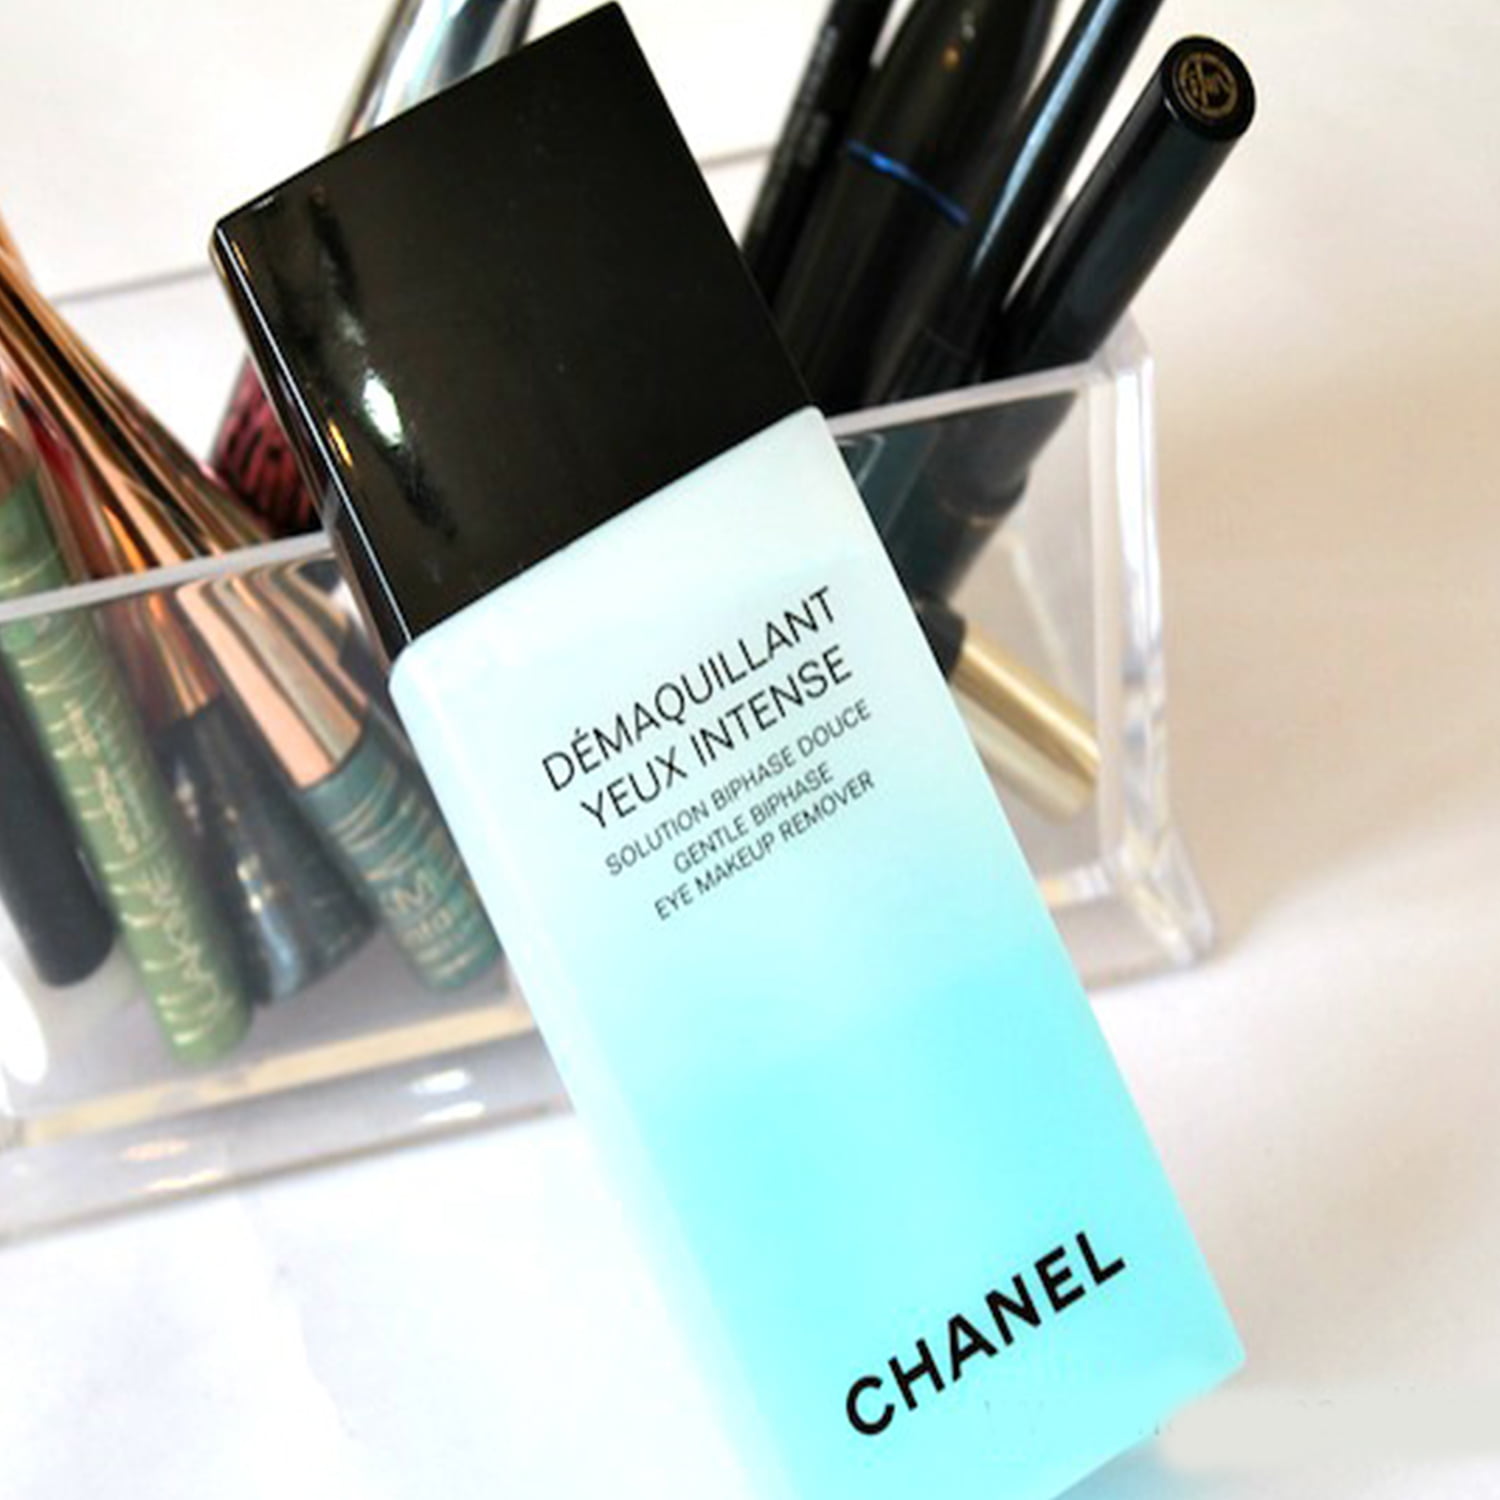 Chanel Demaquillant Yeux Intense Gentle Bi-Phase Eye Makeup Remover 3.4 oz